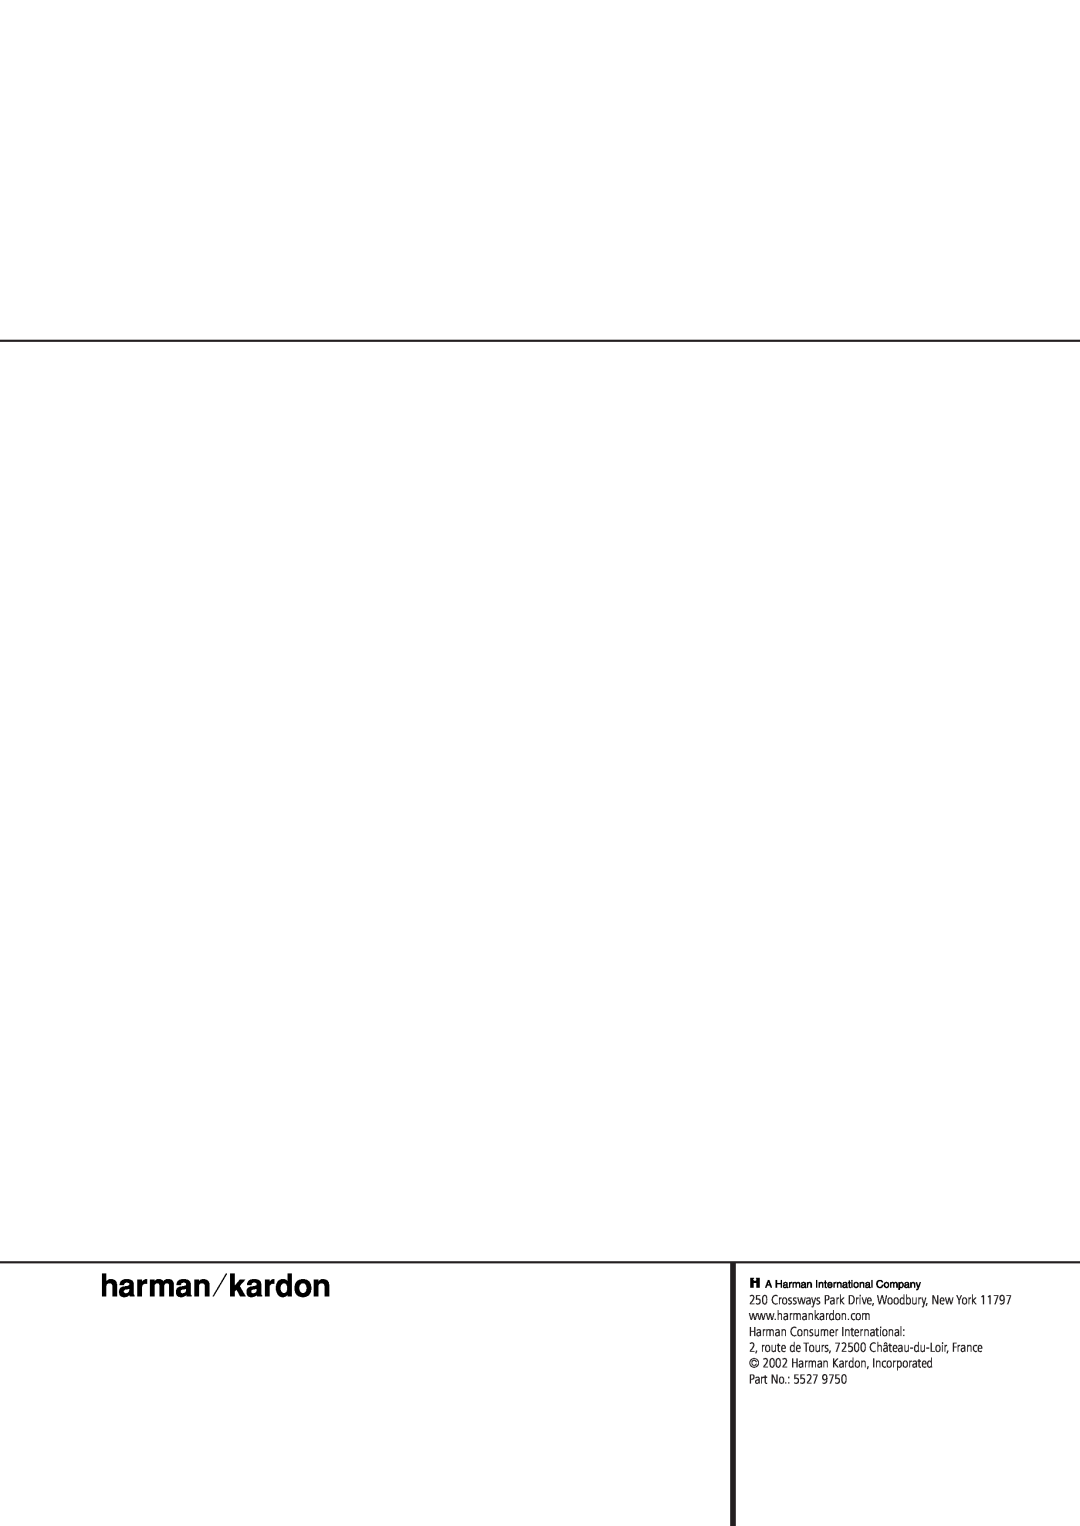 Harman-Kardon AVR 8500 owner manual Harman Consumer International, Part No.: 5527 